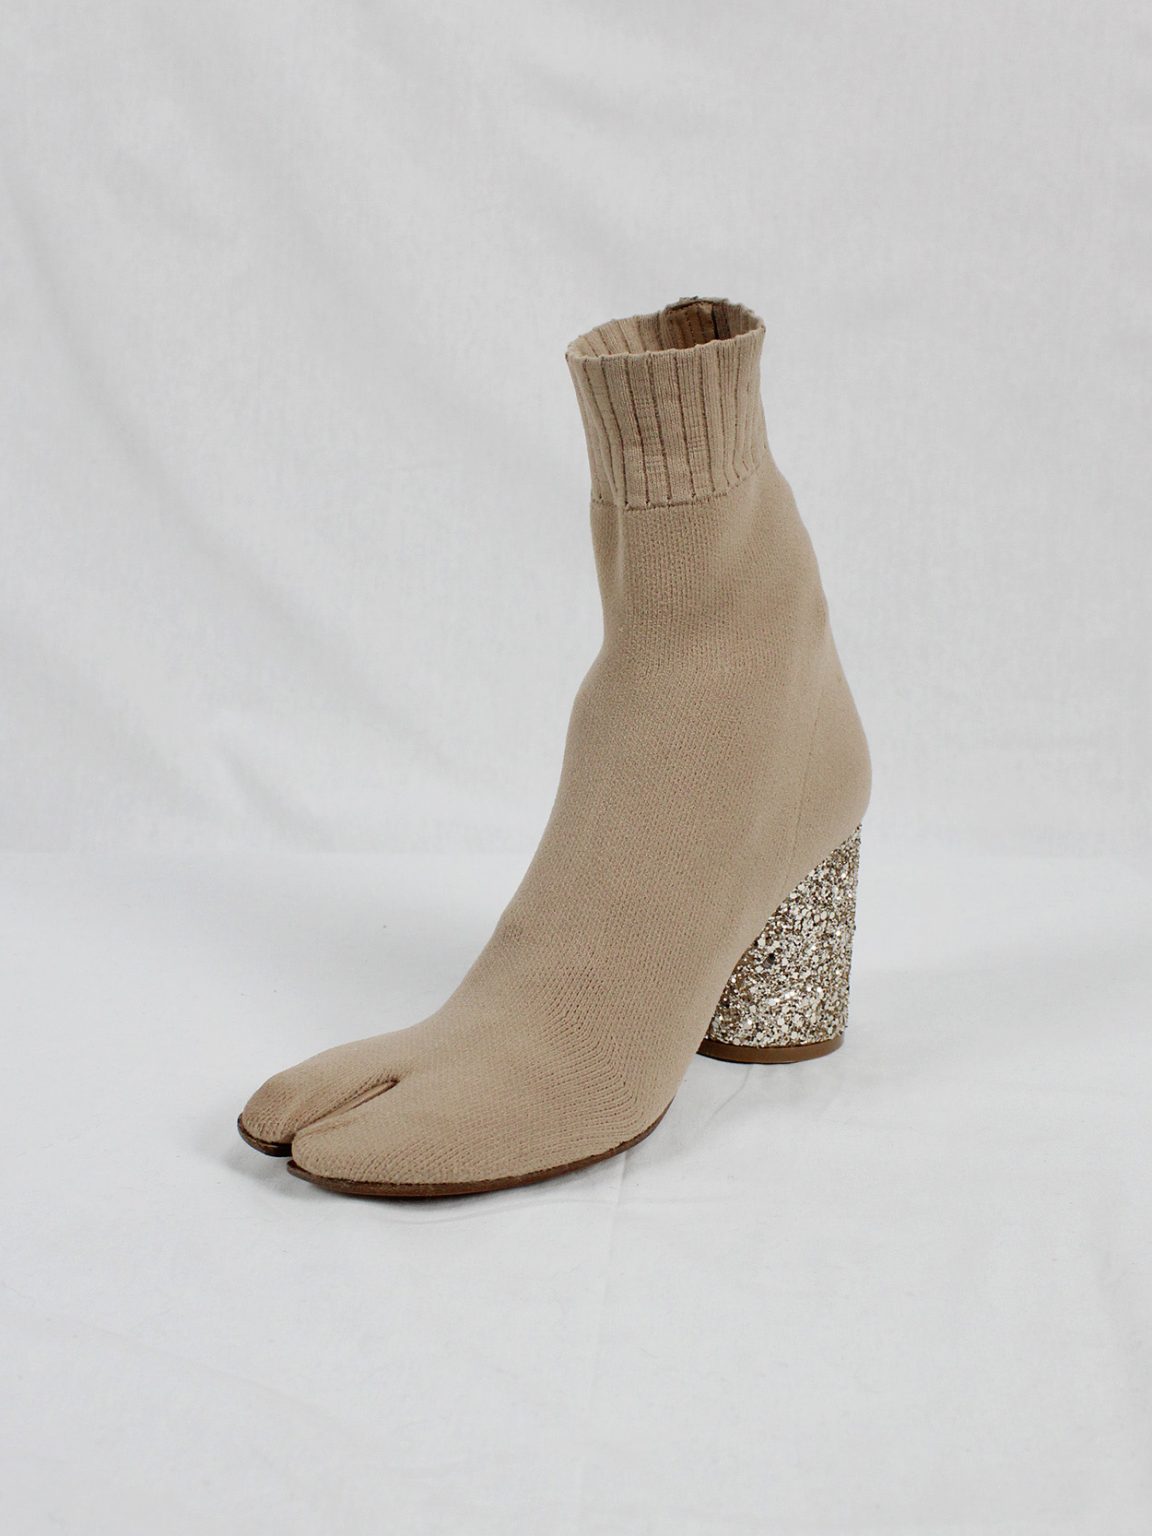 Maison Martin Margiela nude sock tabi boots with glitter heel (38.5) — spring 2019